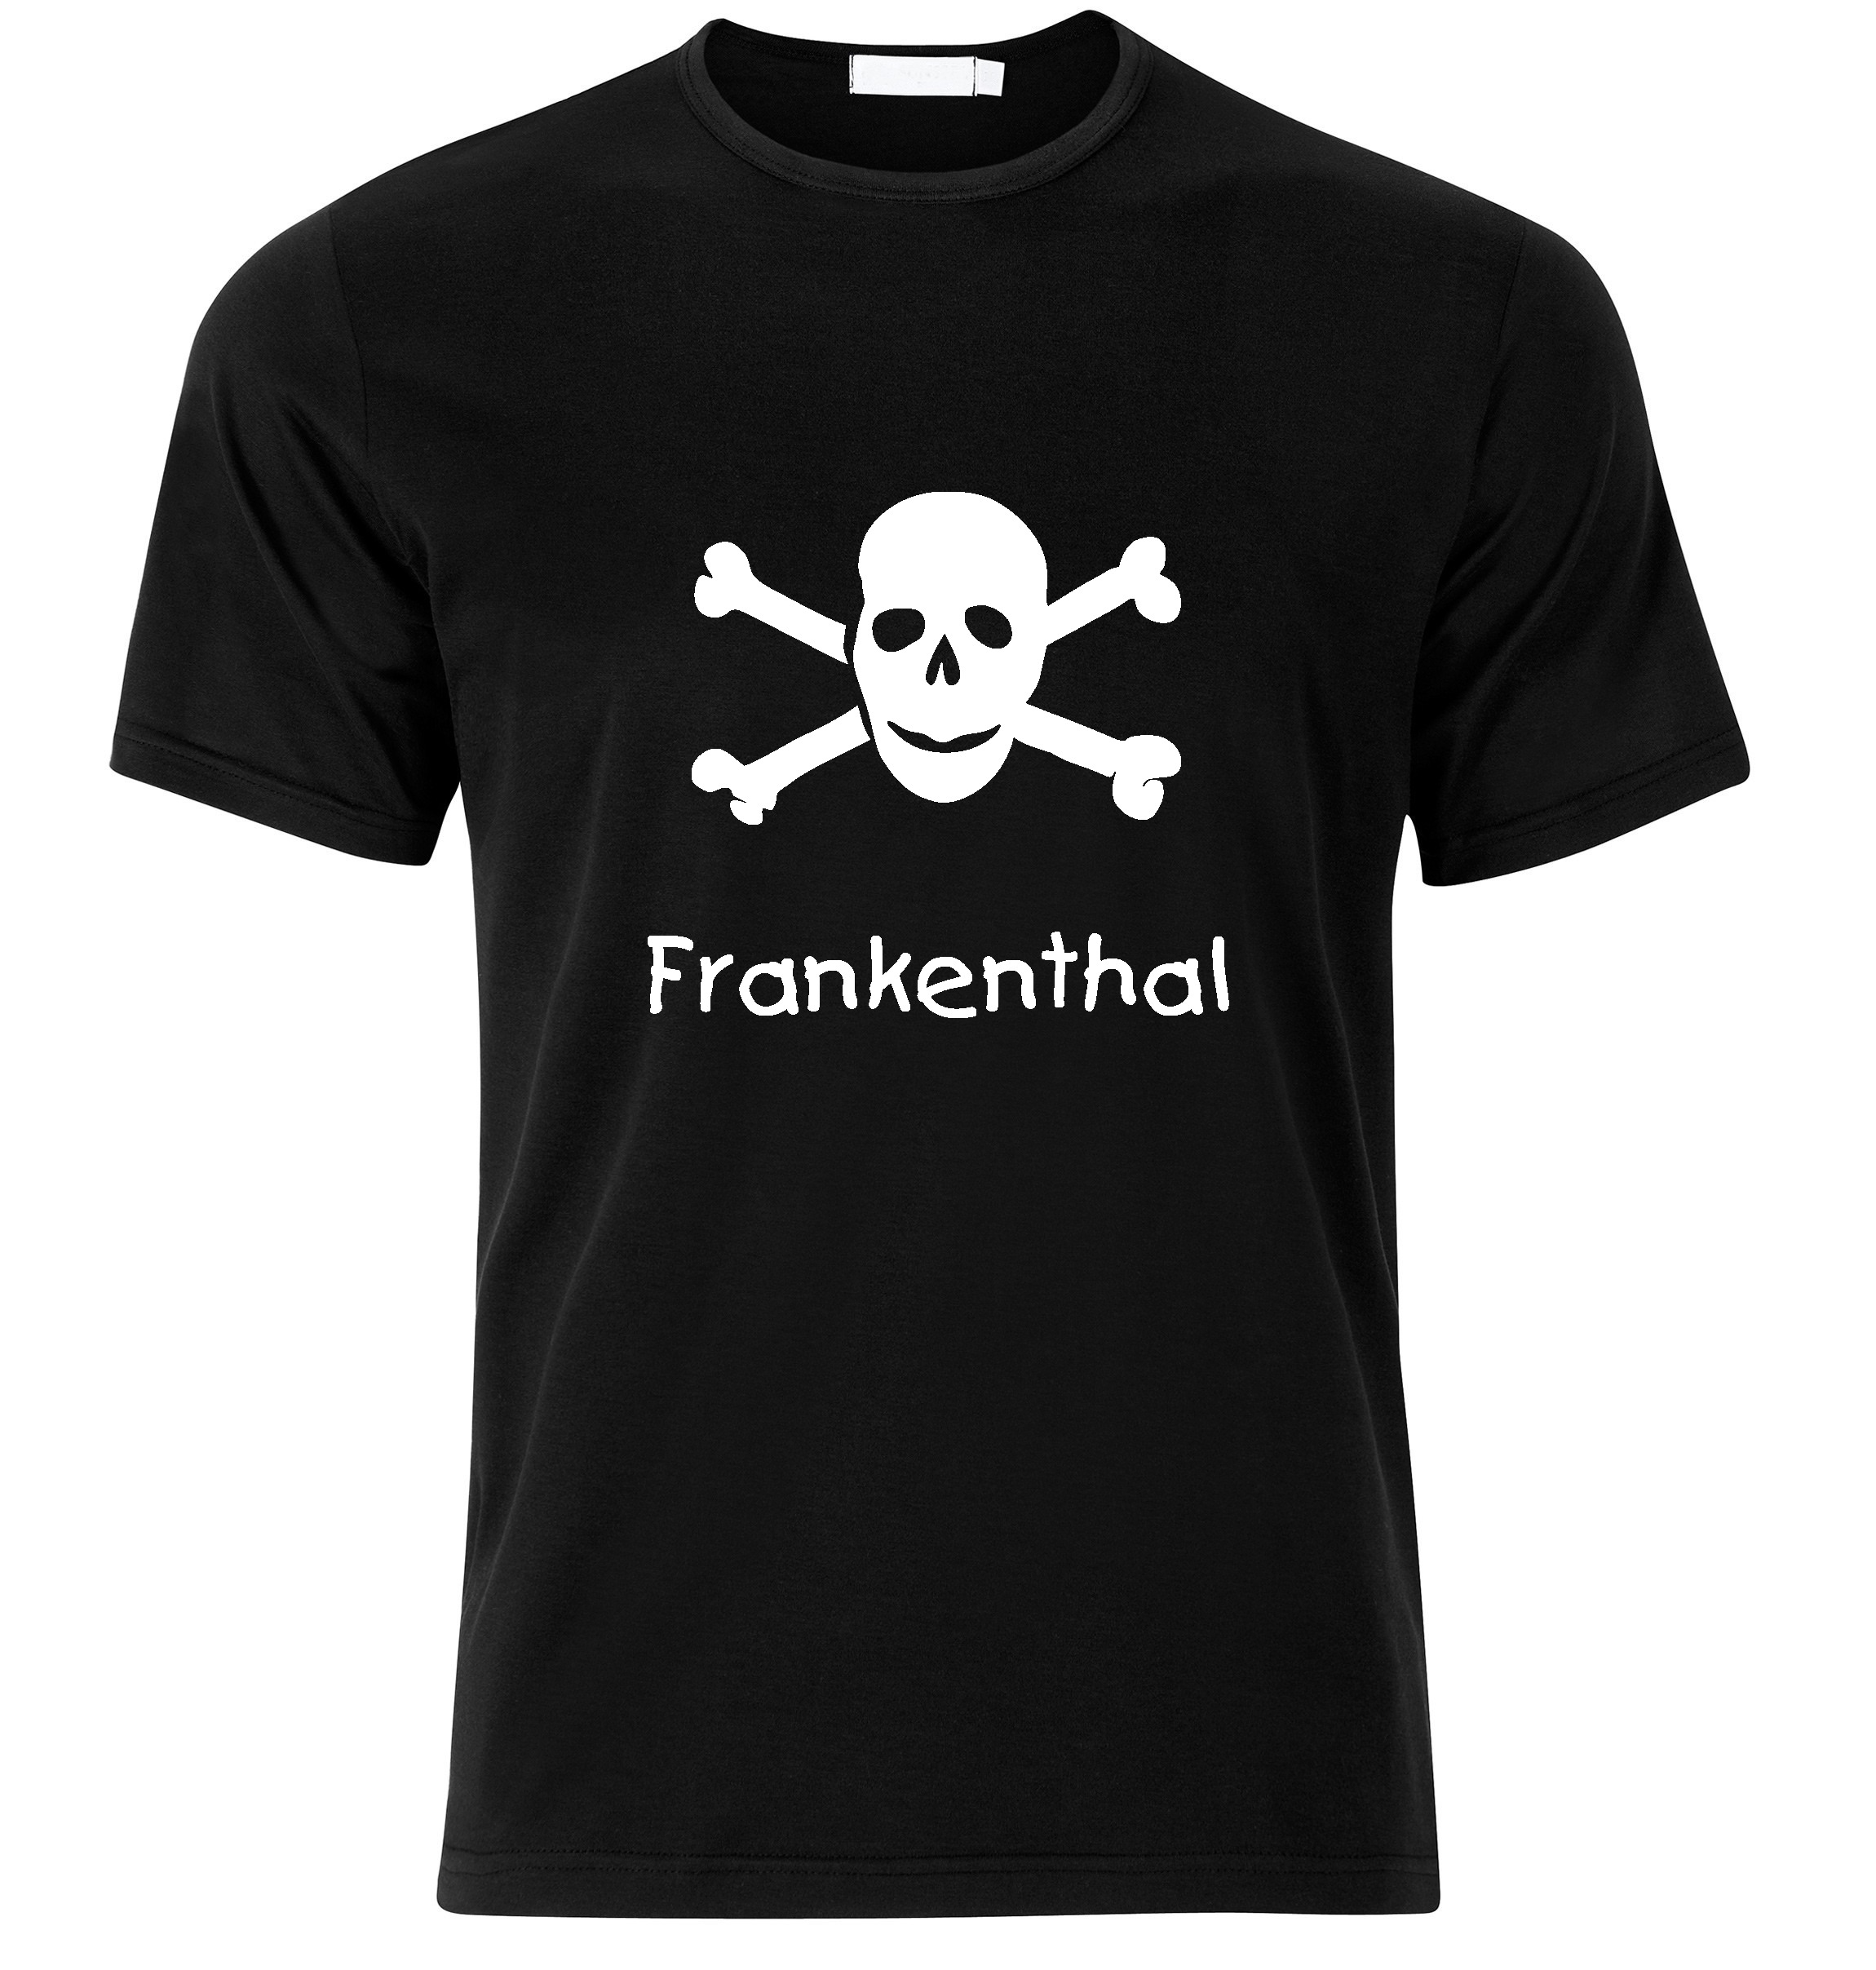 T-Shirt Frankenthal Jolly Roger, Totenkopf